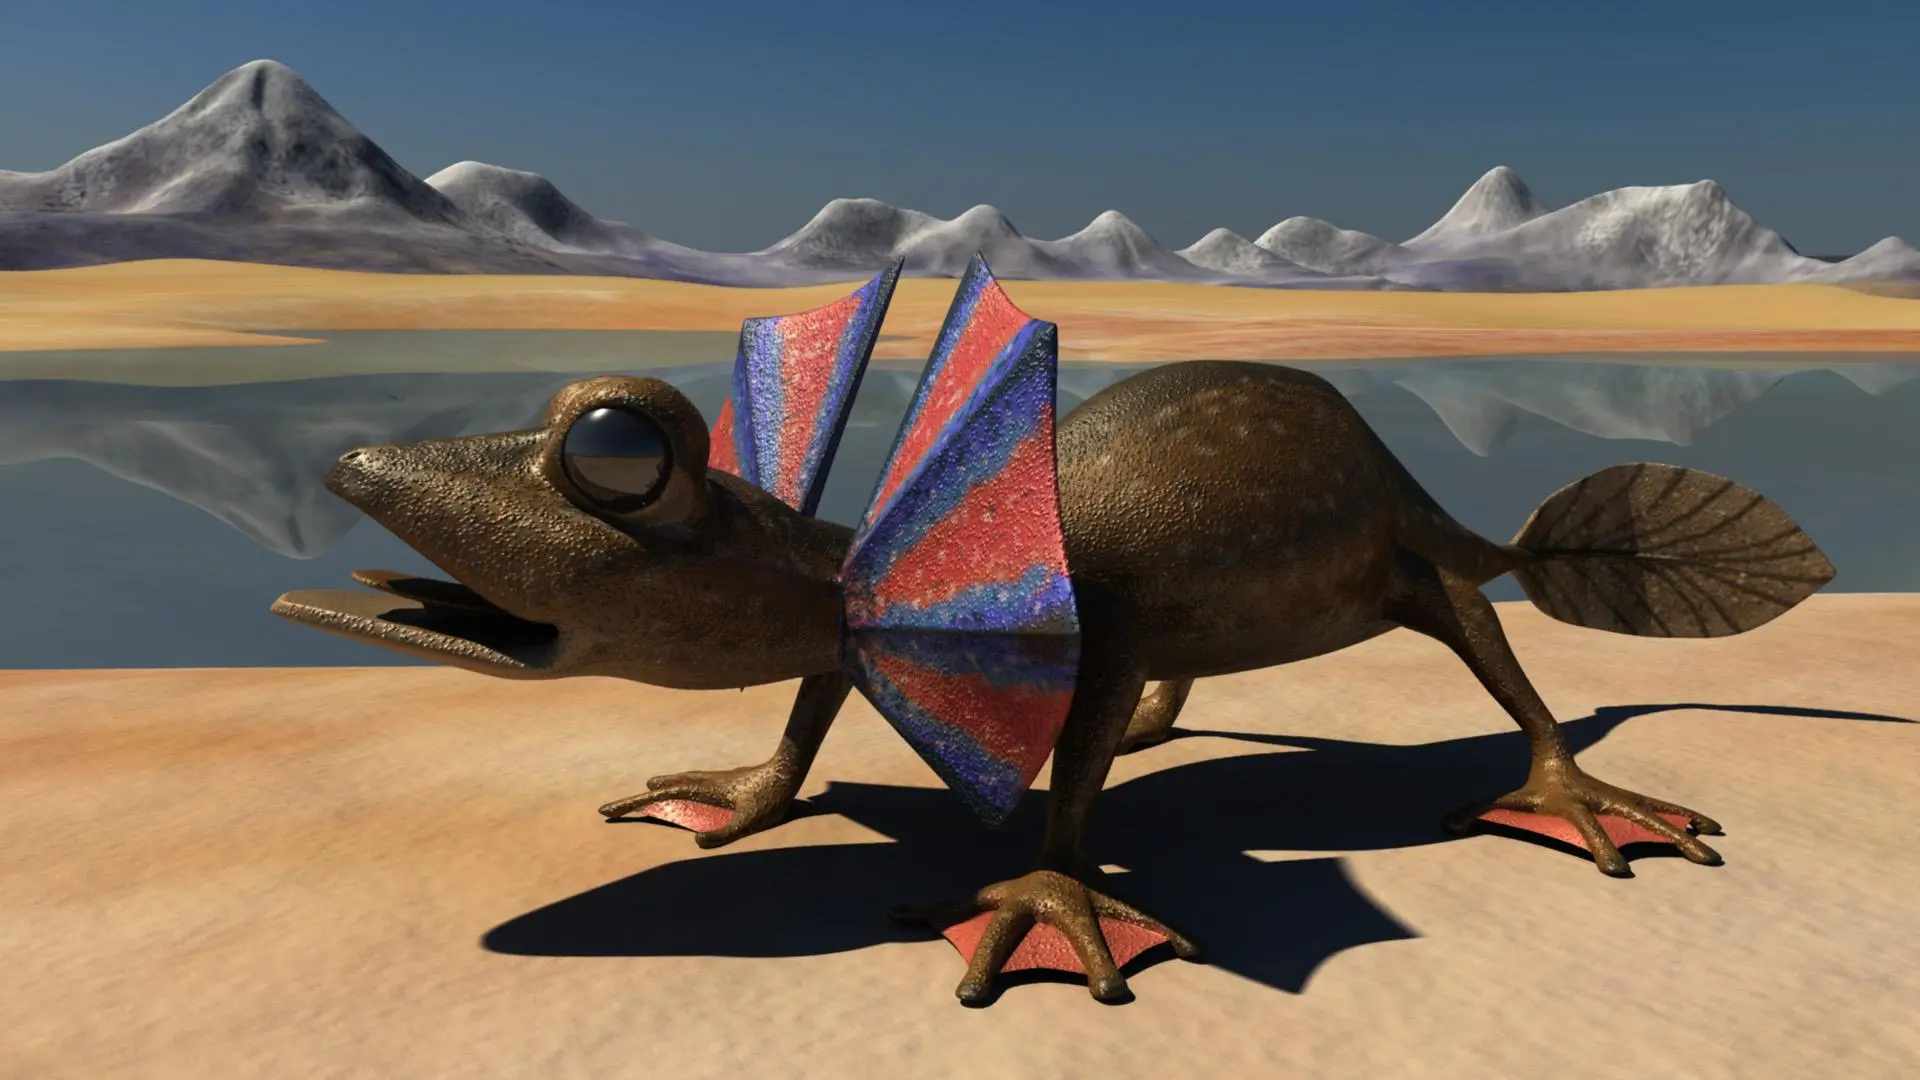 A 3D illustration of an animal resembling a frilled lizard.